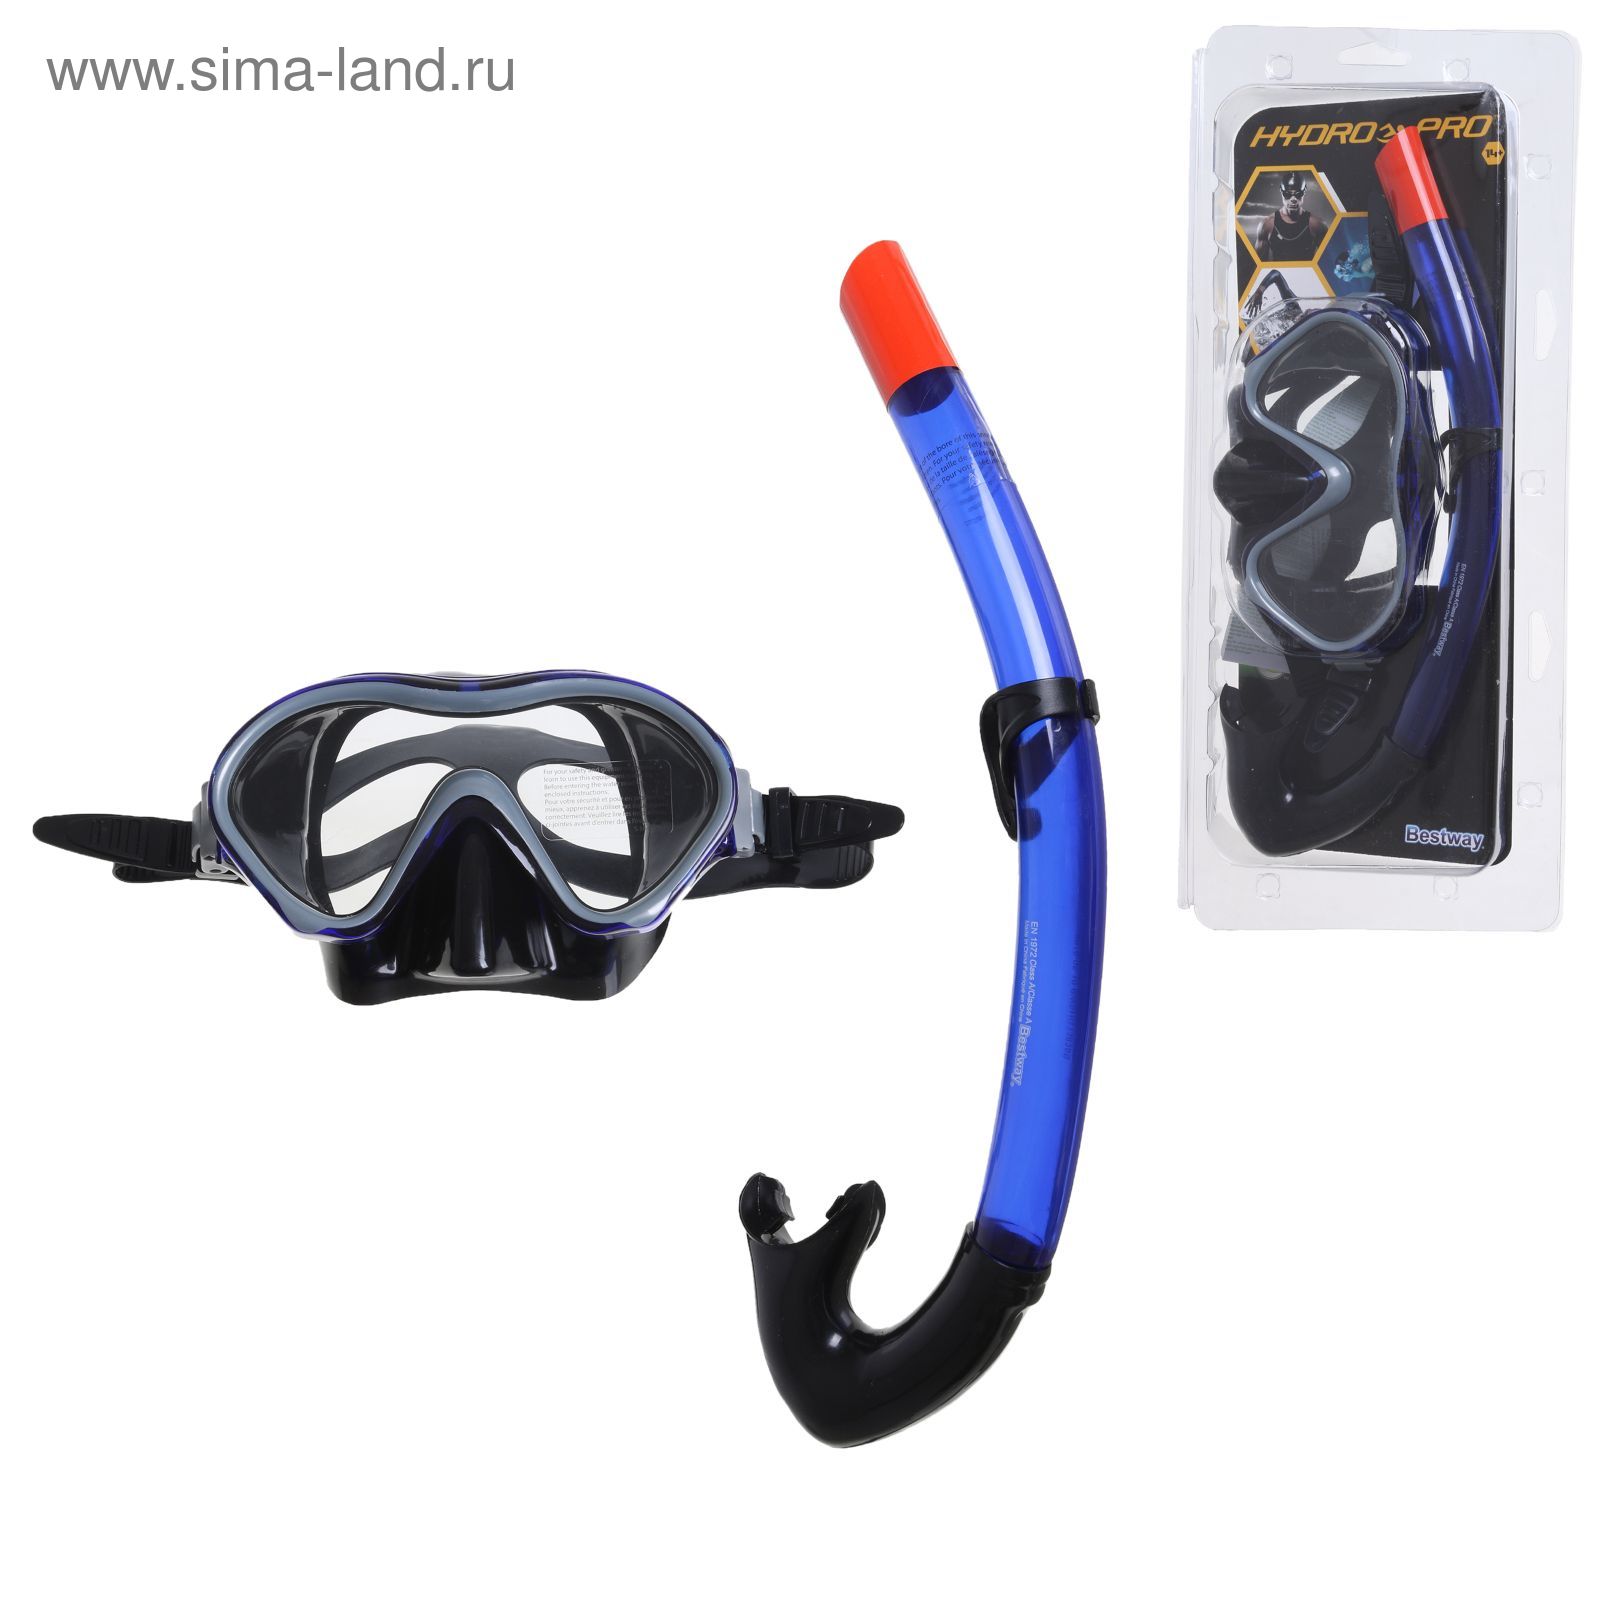 Набор для плавания Aero-Form, 2 предмета: маска, трубка, от 14 лет, цвет МИКС Bestway